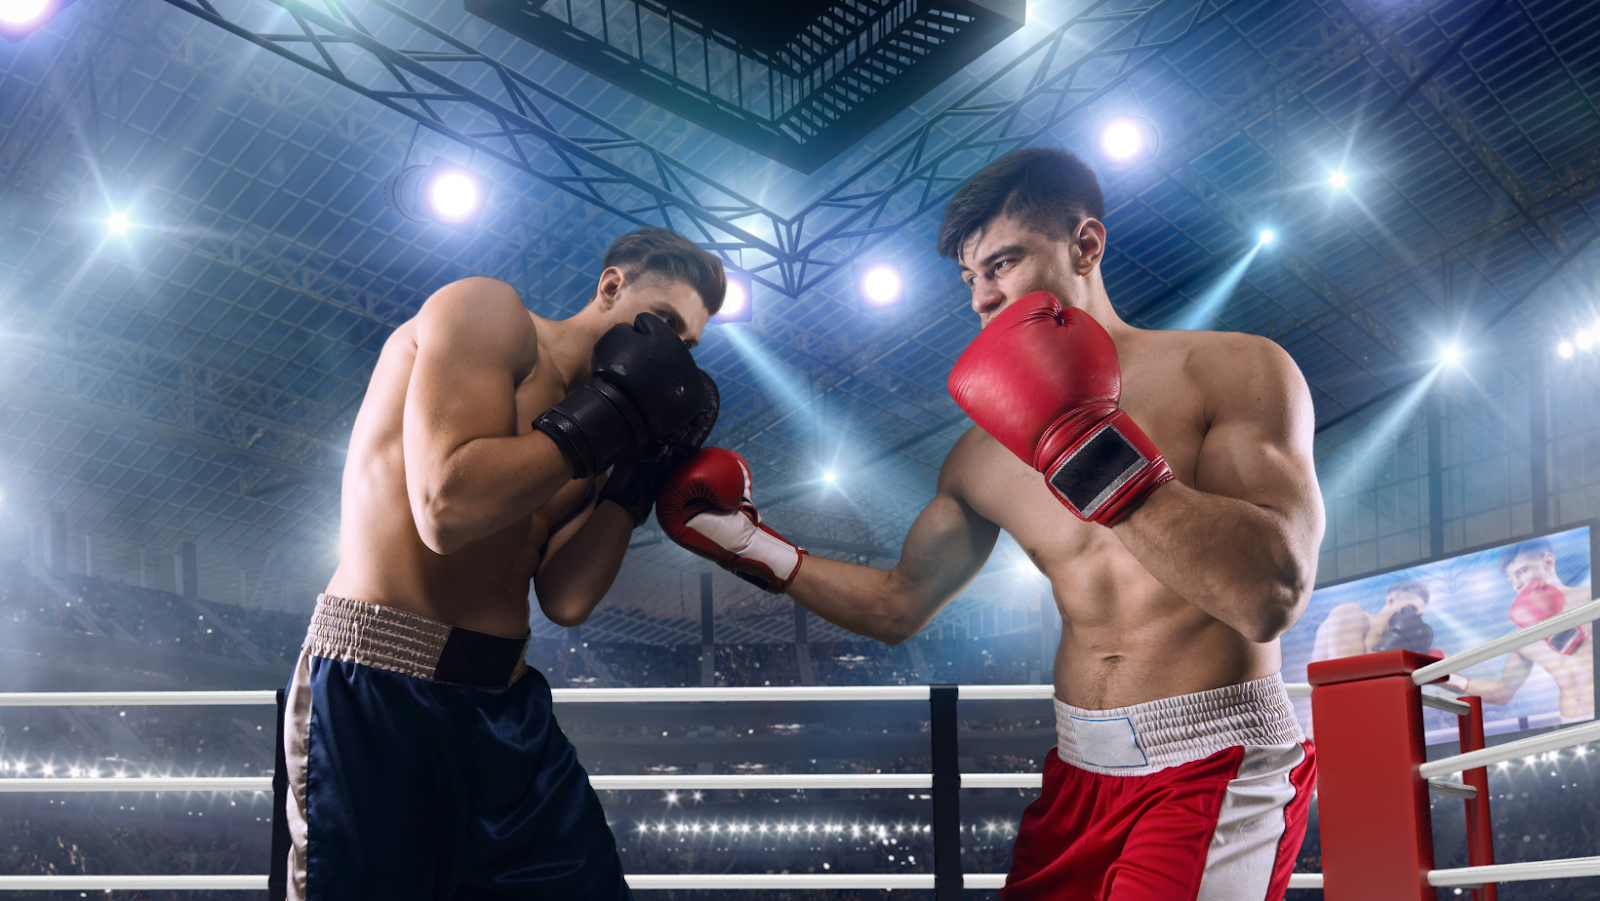 TikTok vs YouTube: Who Will Win the Boxing Schedule?